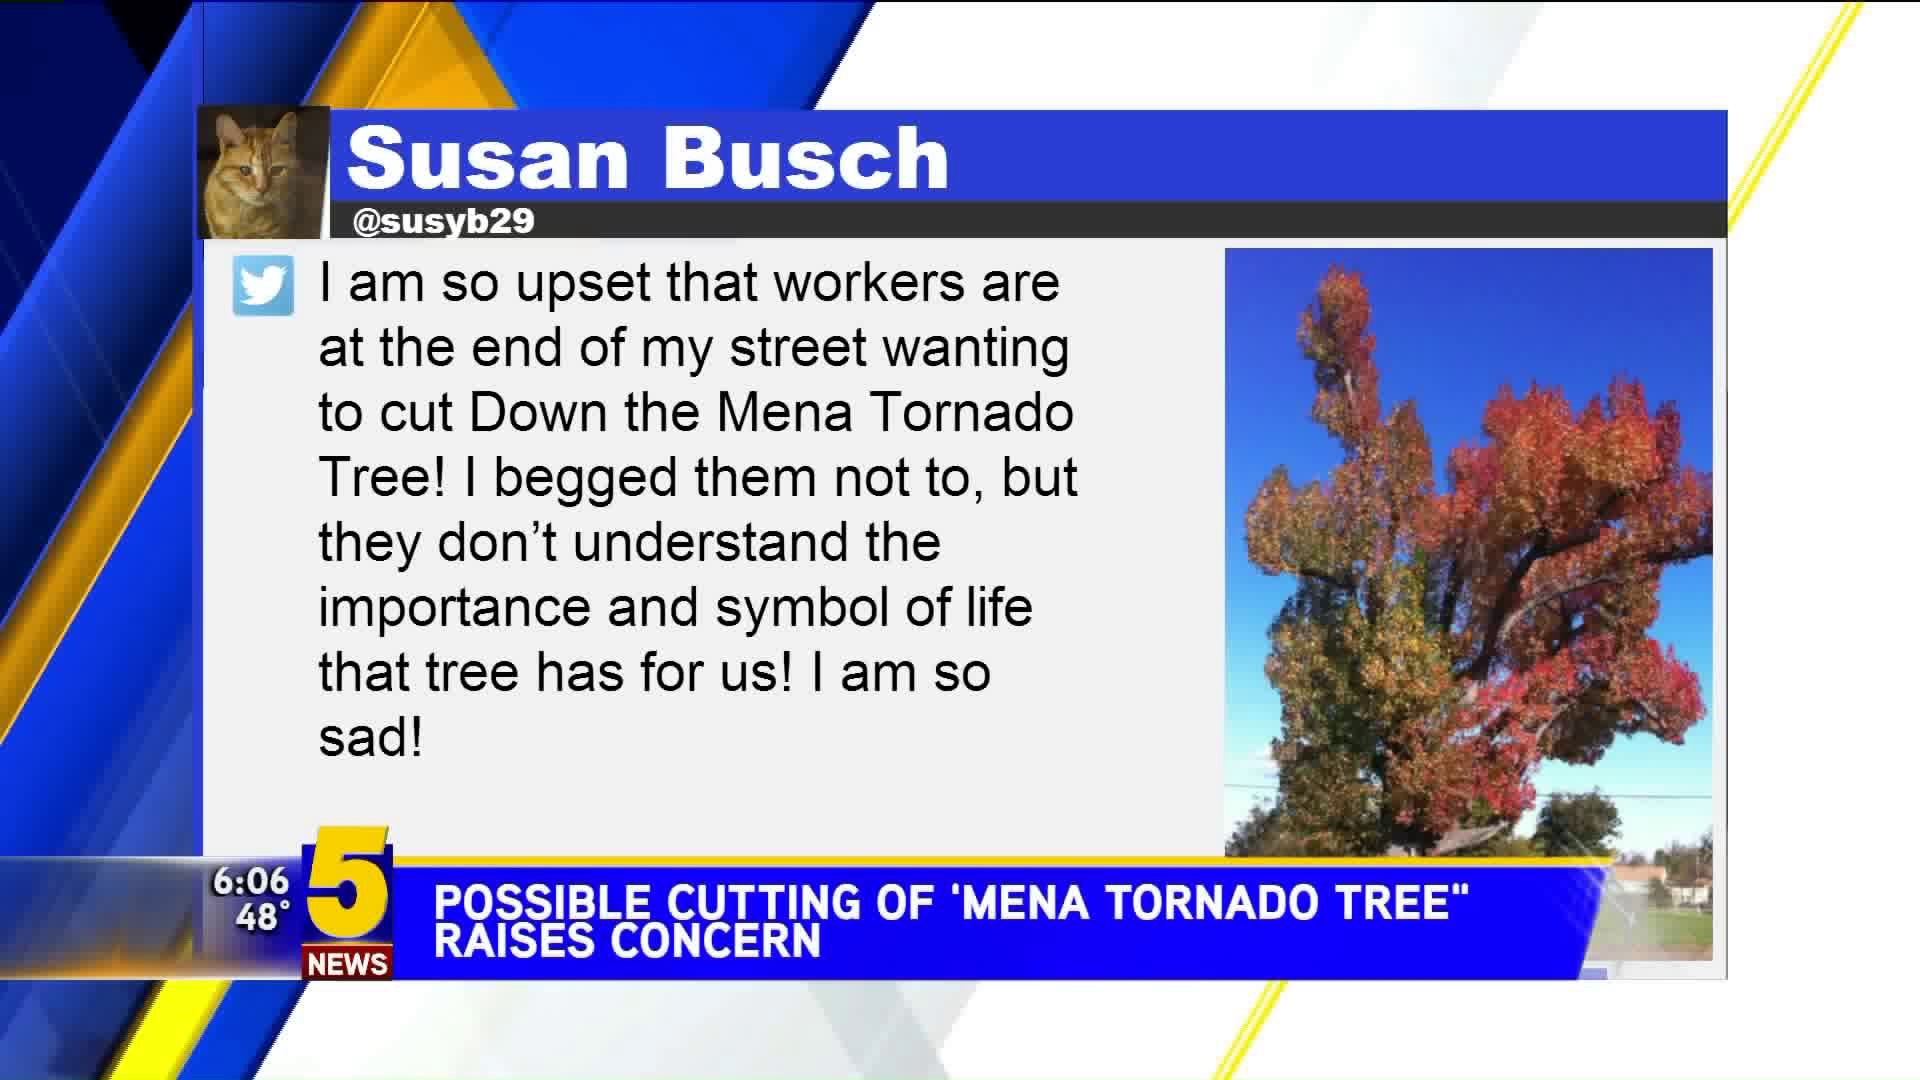 Possible Cutting Of "Mena Tornado Tree" Raises Concerns